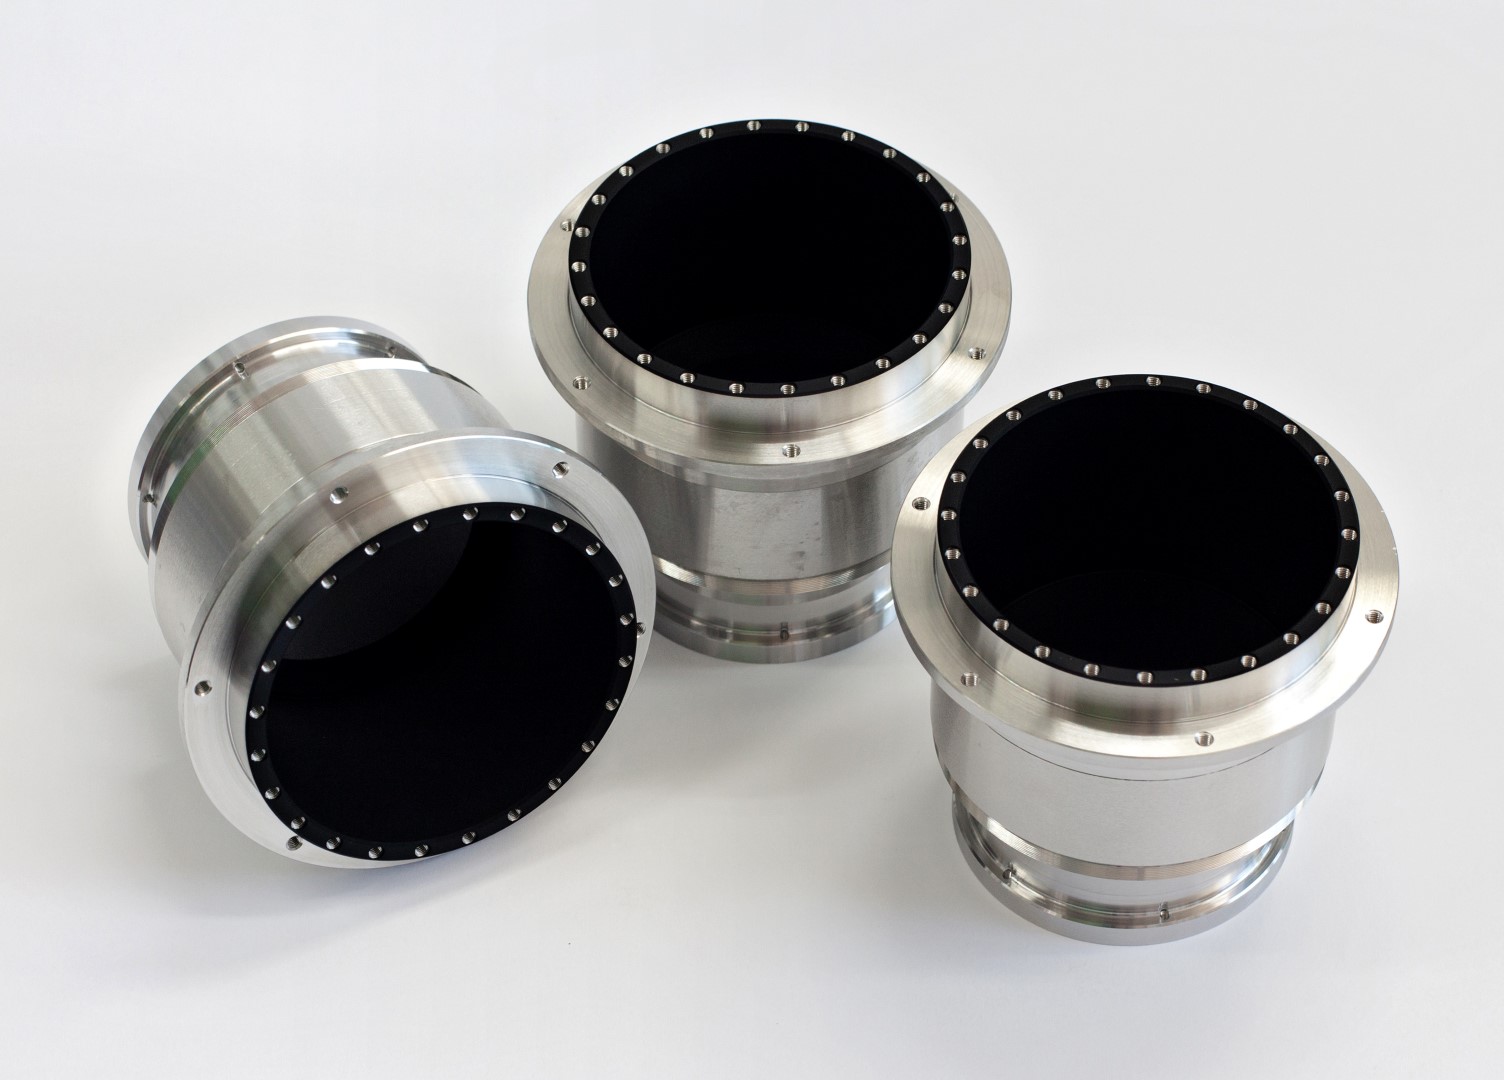 3 circular metallic components coated with acktar’s Vacuum Black coating